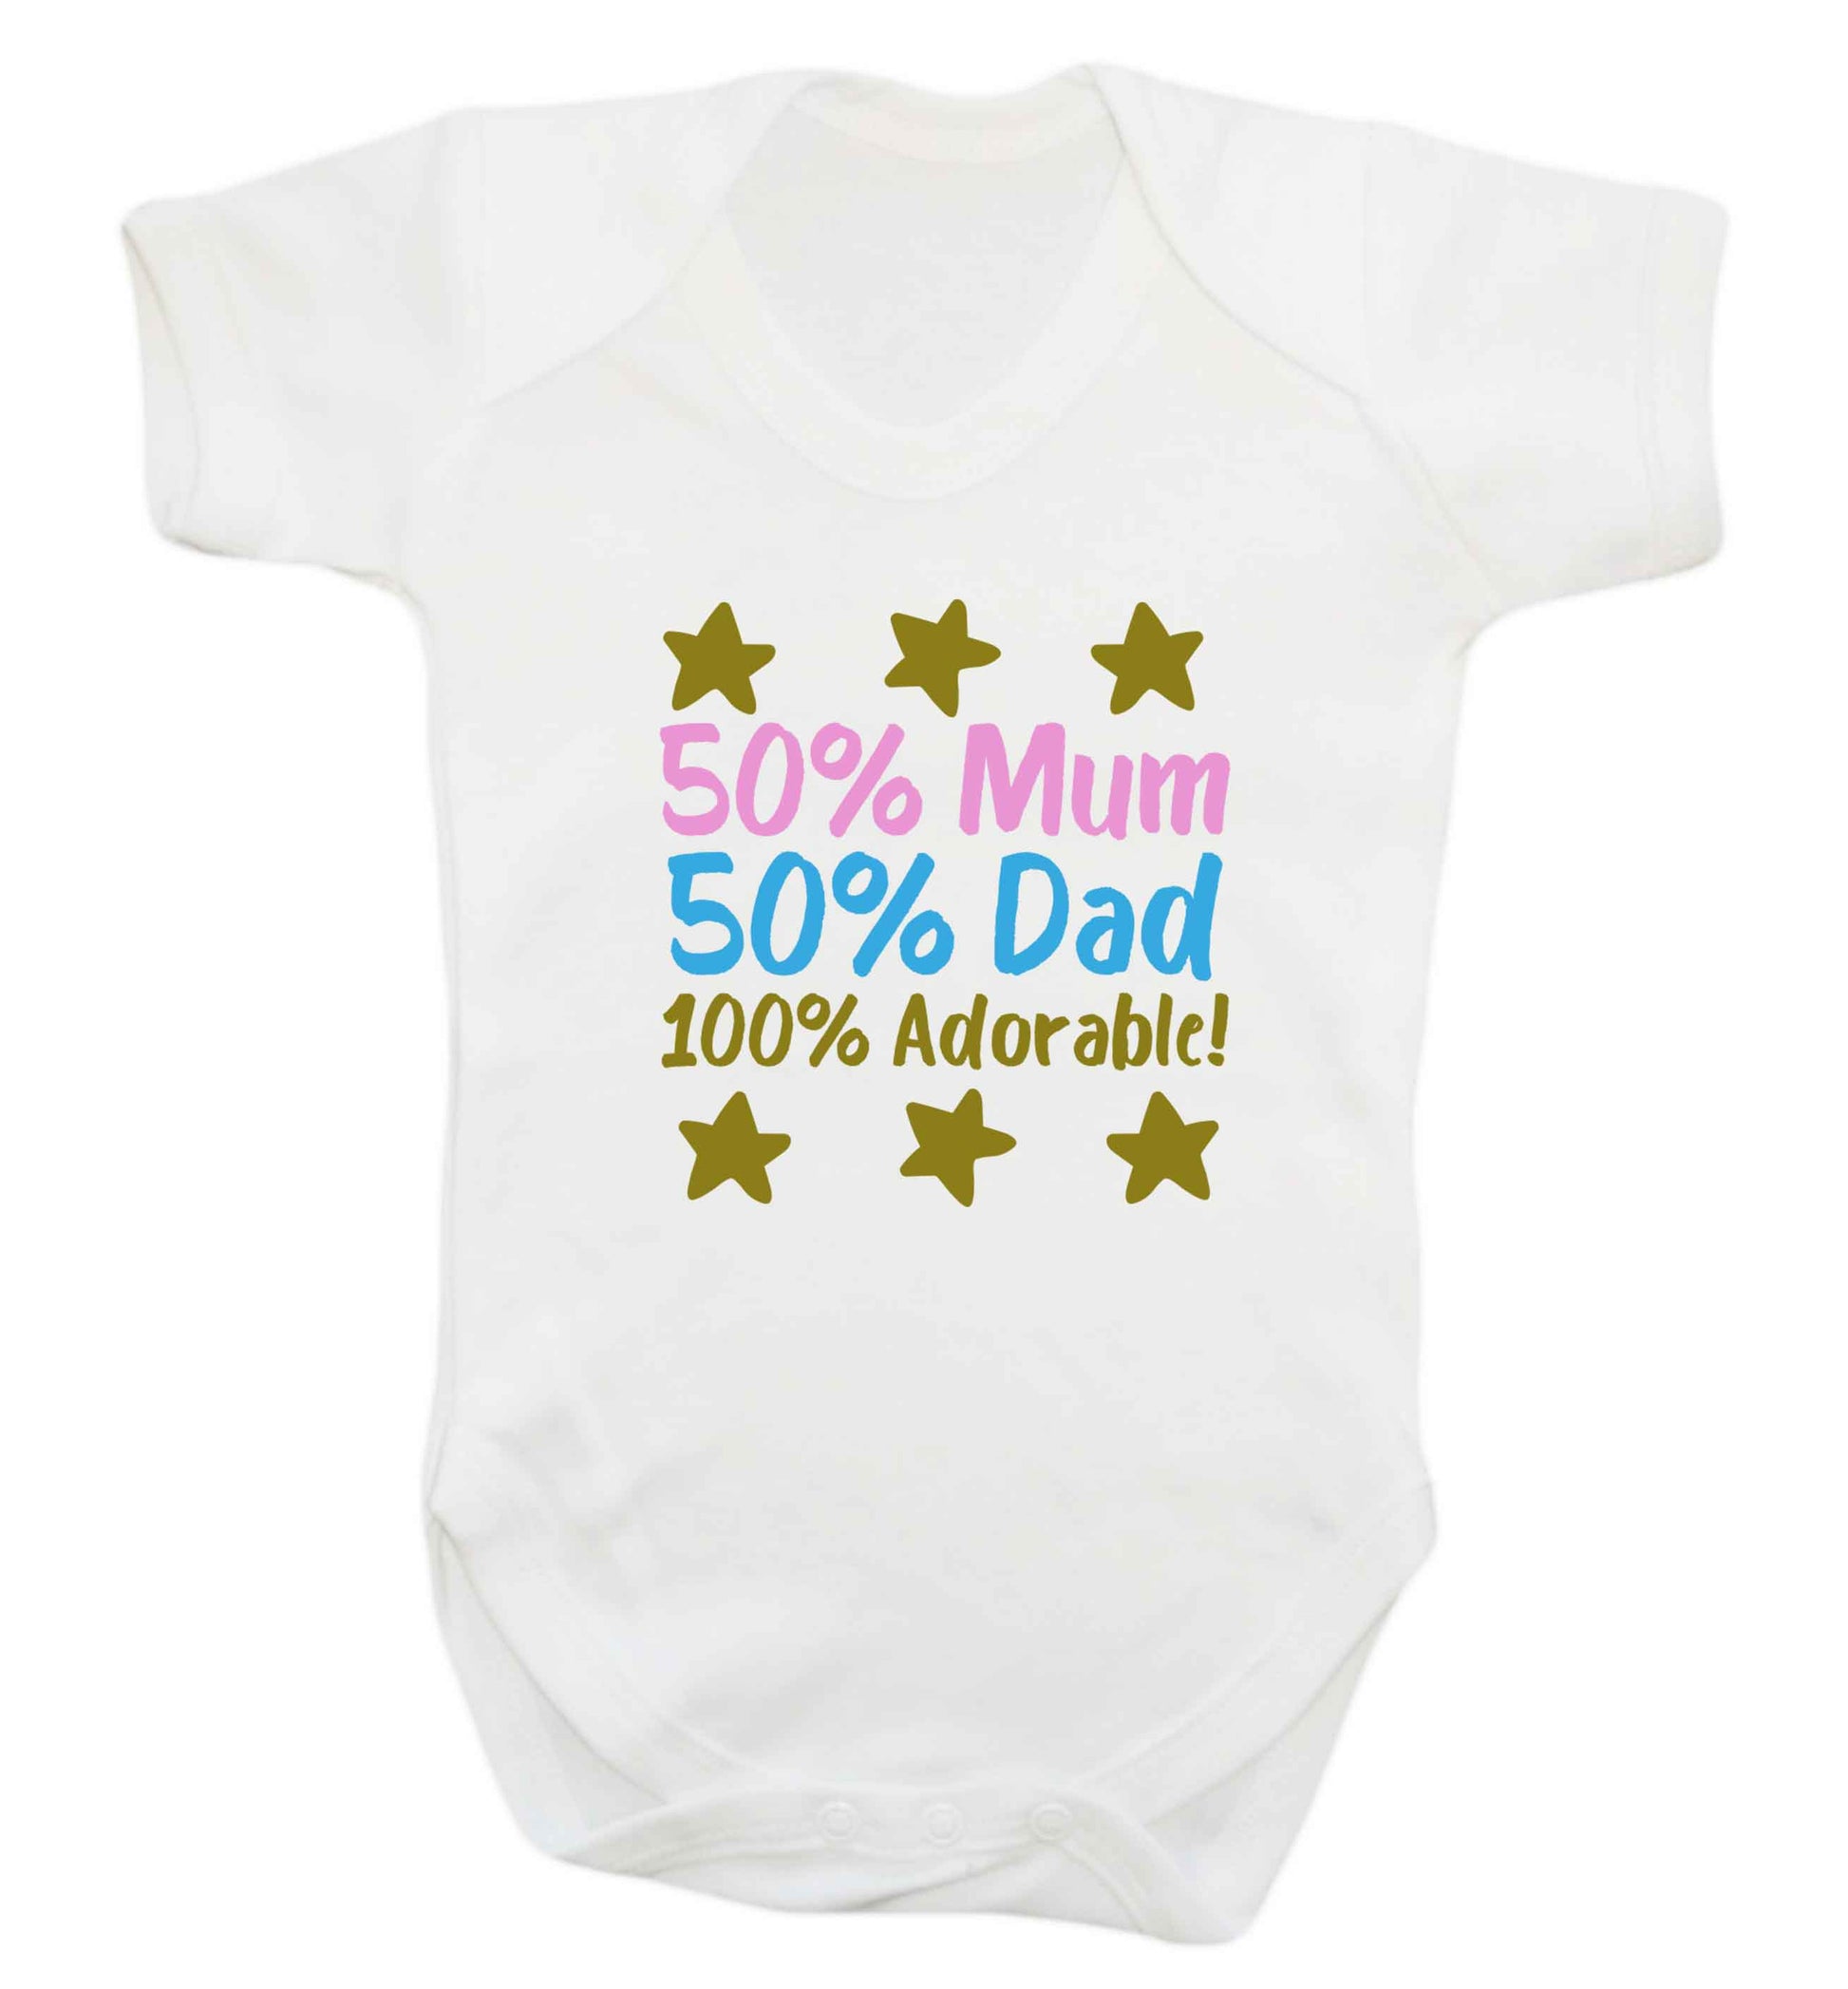 50% mum 50% dad 100% adorable baby vest white 18-24 months